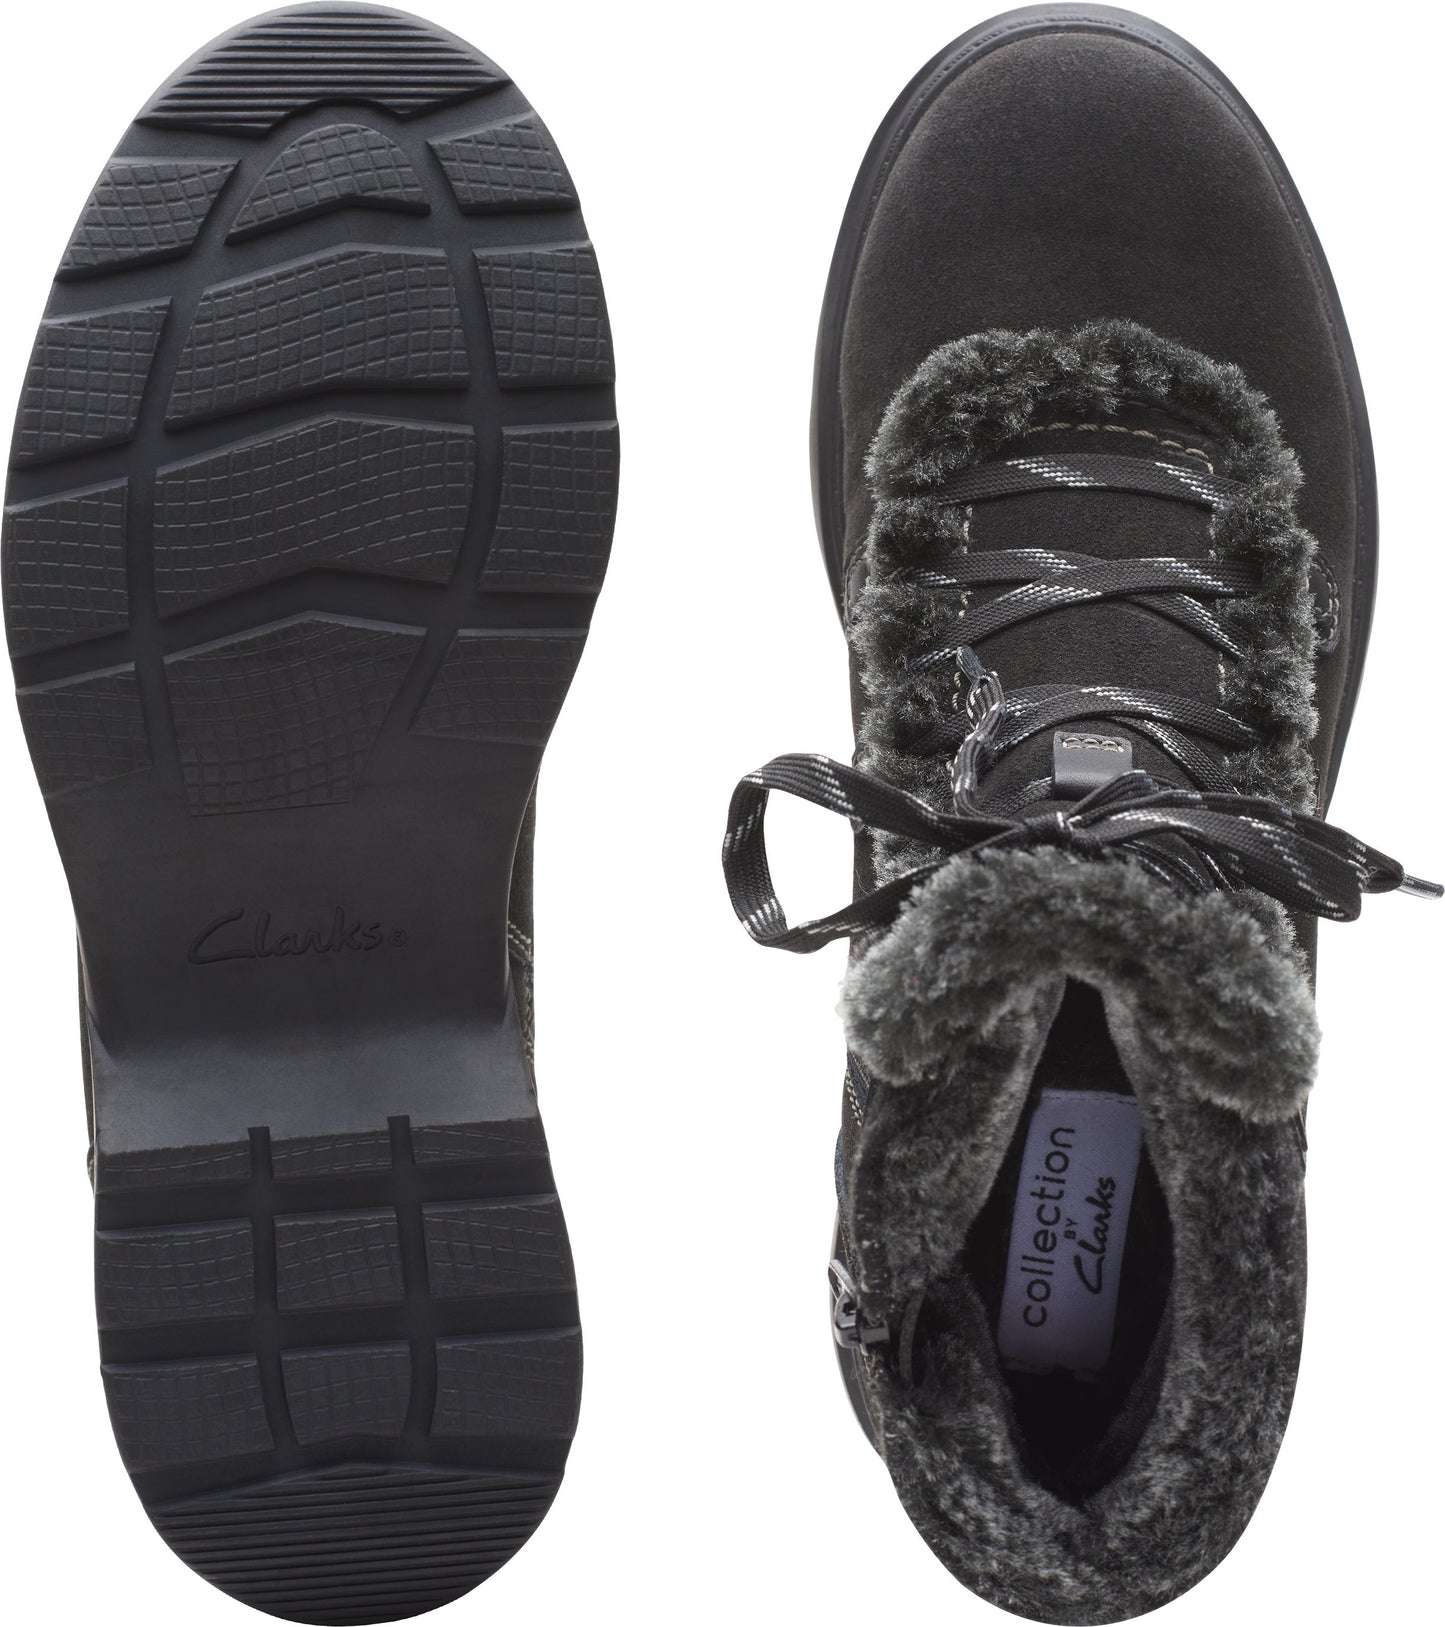 Clarks Boots Aveleigh Zip Wool Lined Waterproof Black